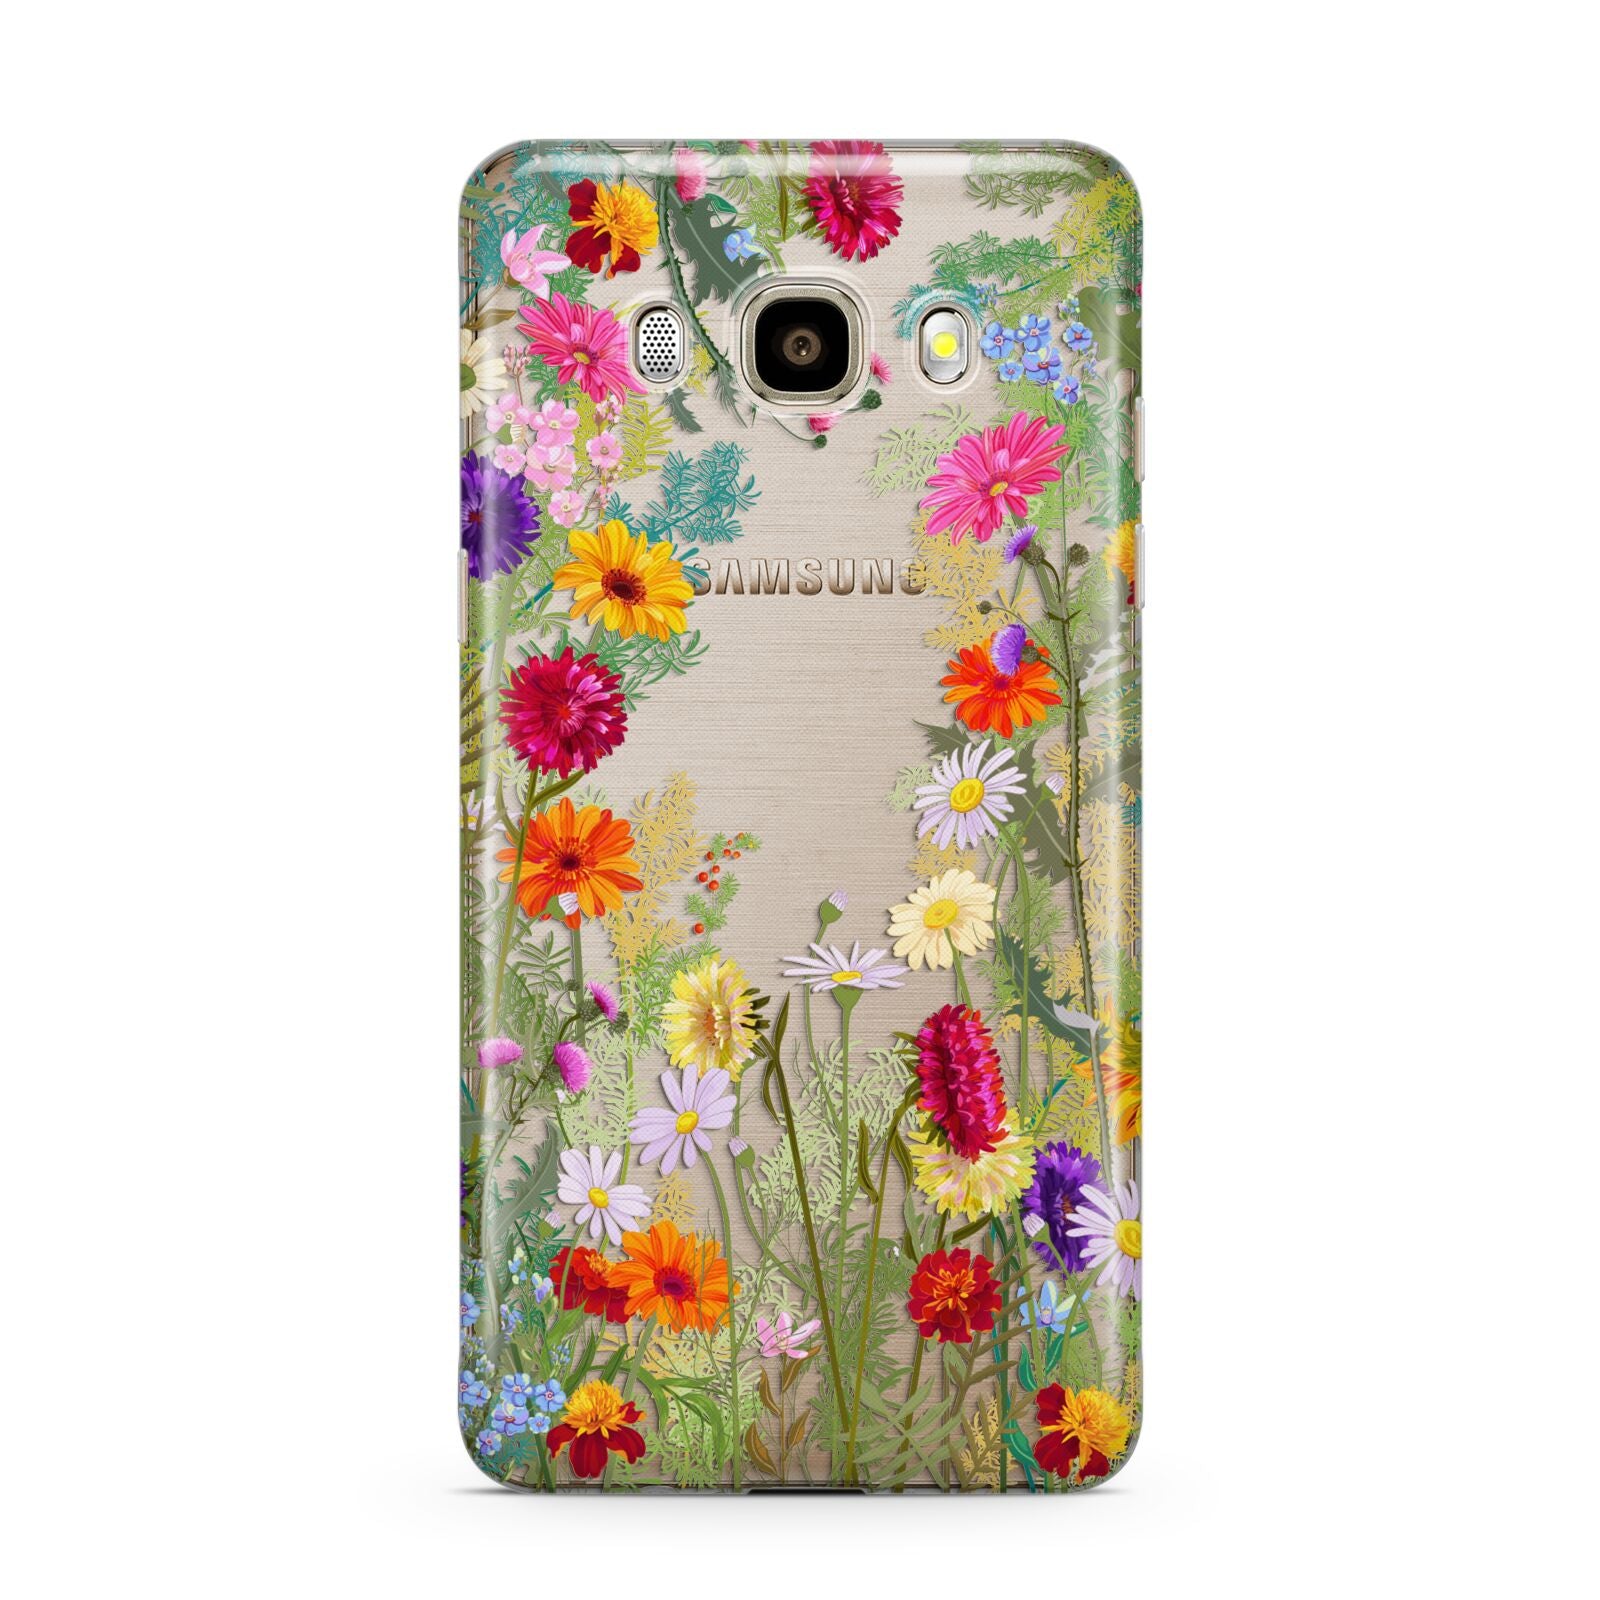 Wildflower Samsung Galaxy J7 2016 Case on gold phone